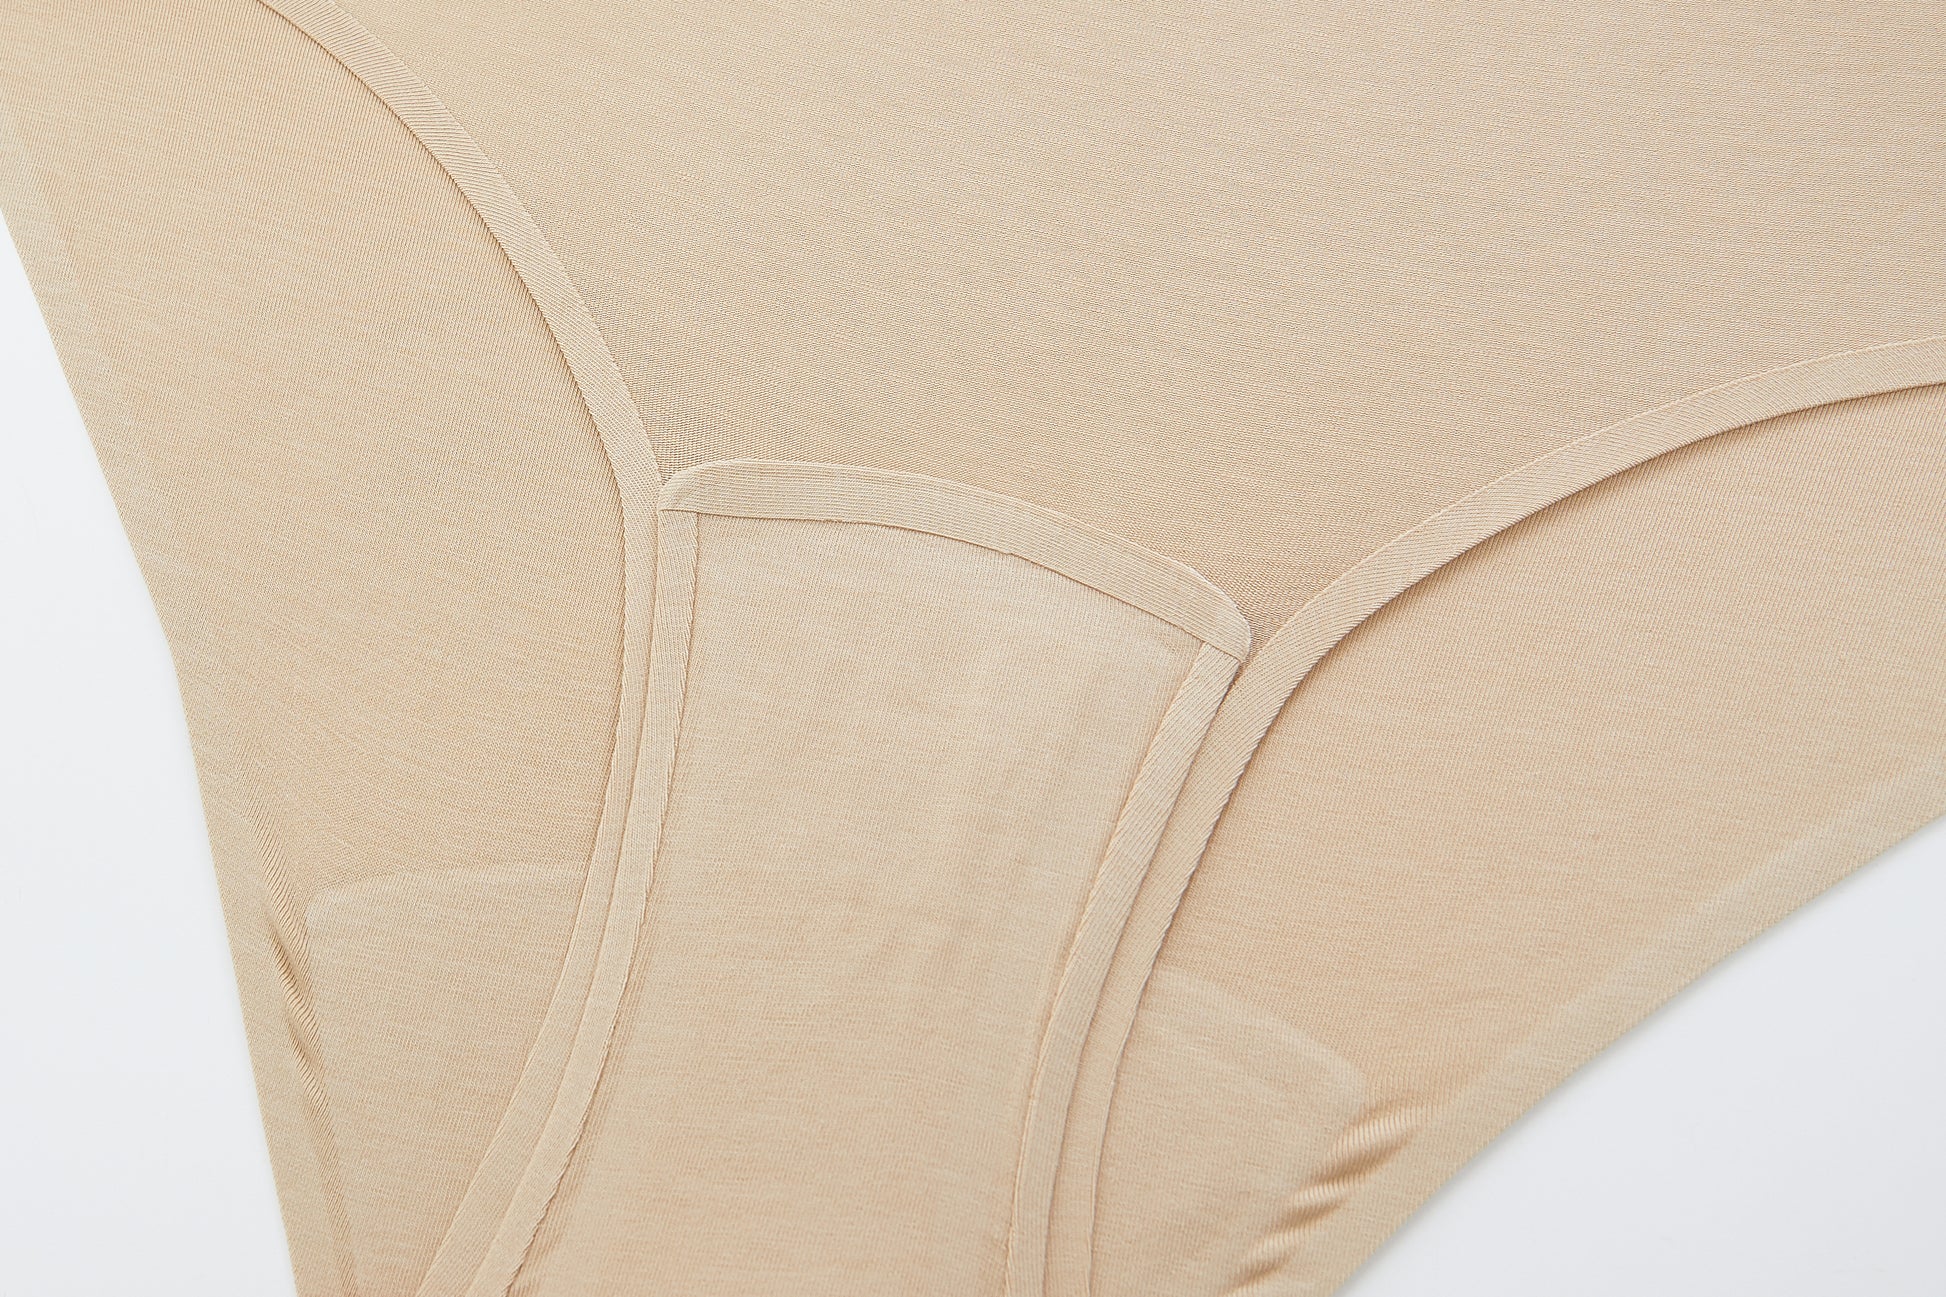 Jockey Women's Worry Free Period Underwear Briefs Beige S